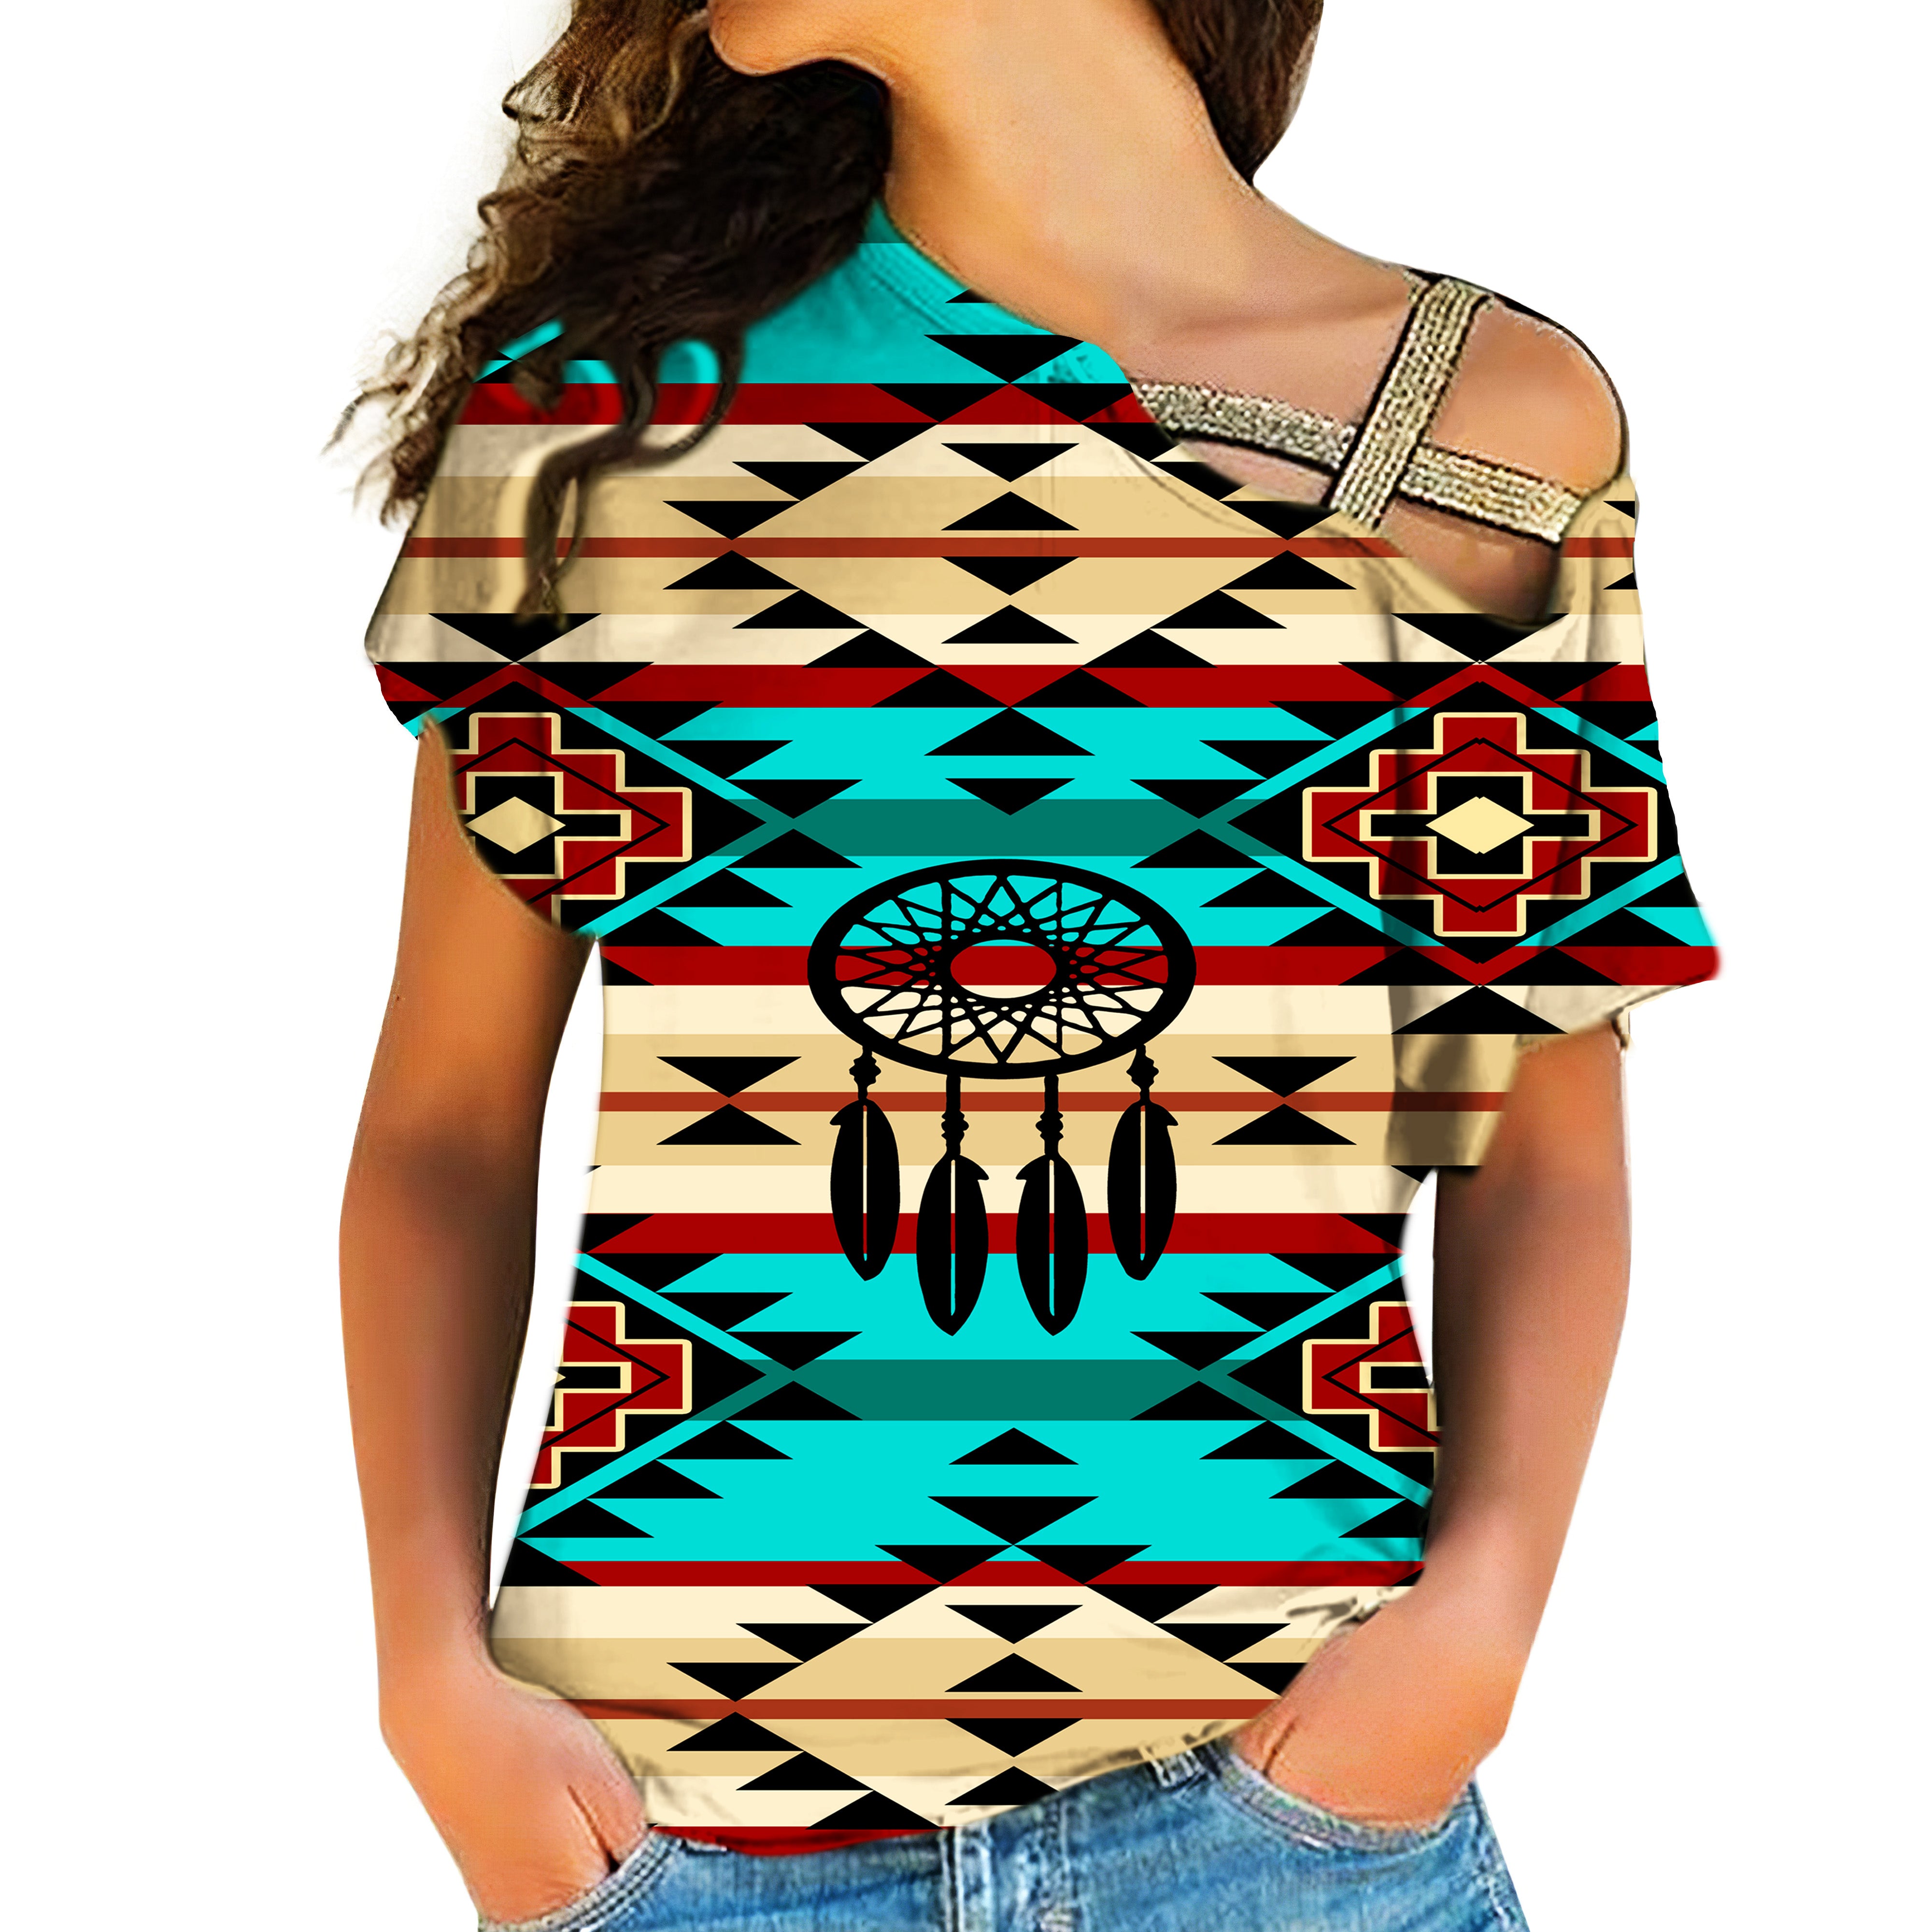 Powwow Store native american cross shoulder shirt 1174